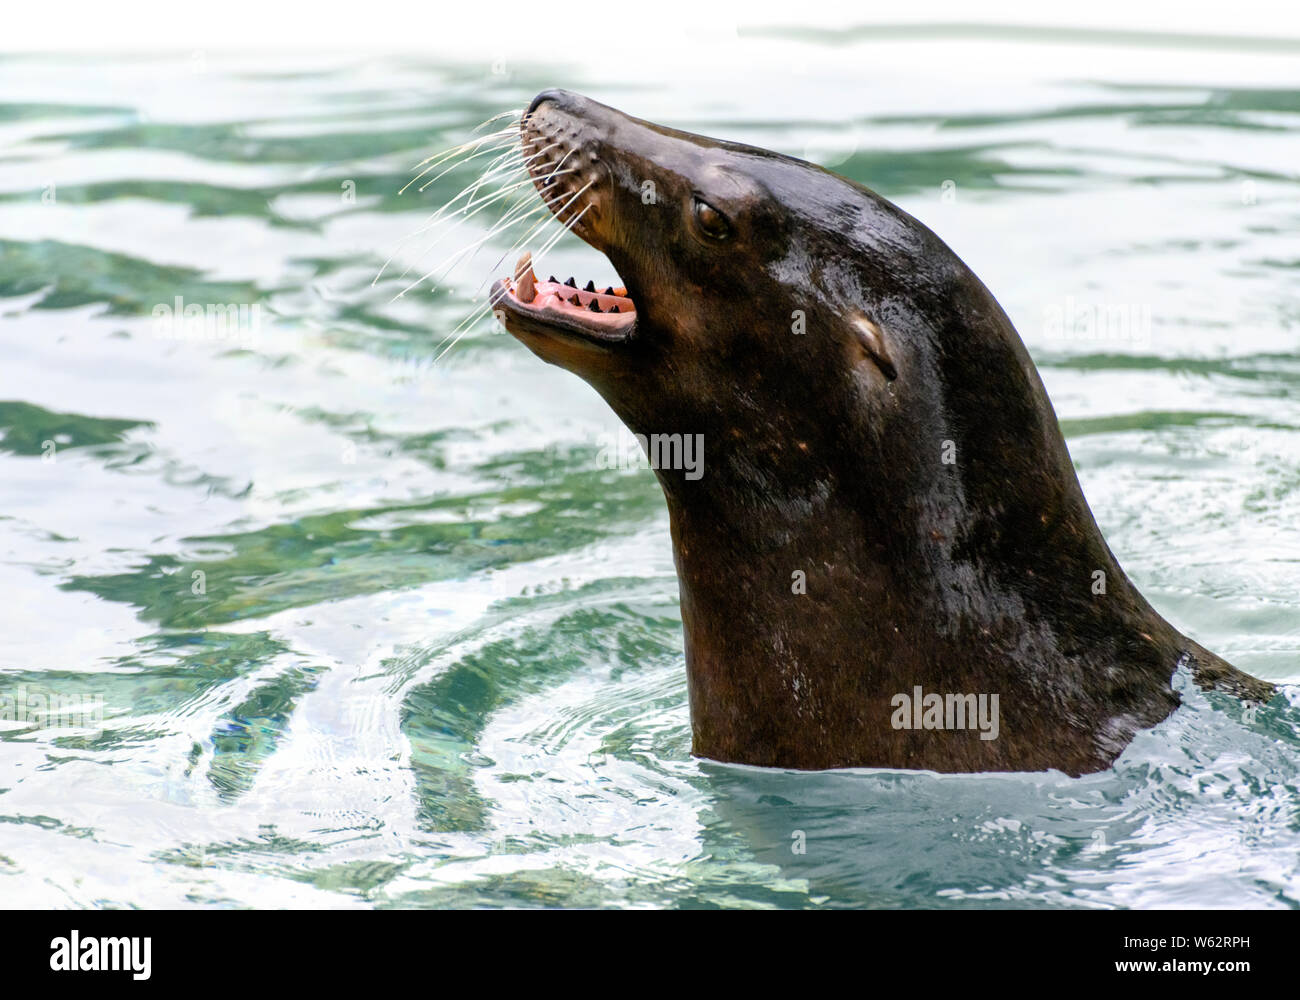 Closeup portrait of a California Sea Lion (Zalophus californianus) mouth open, barking Stock Photo